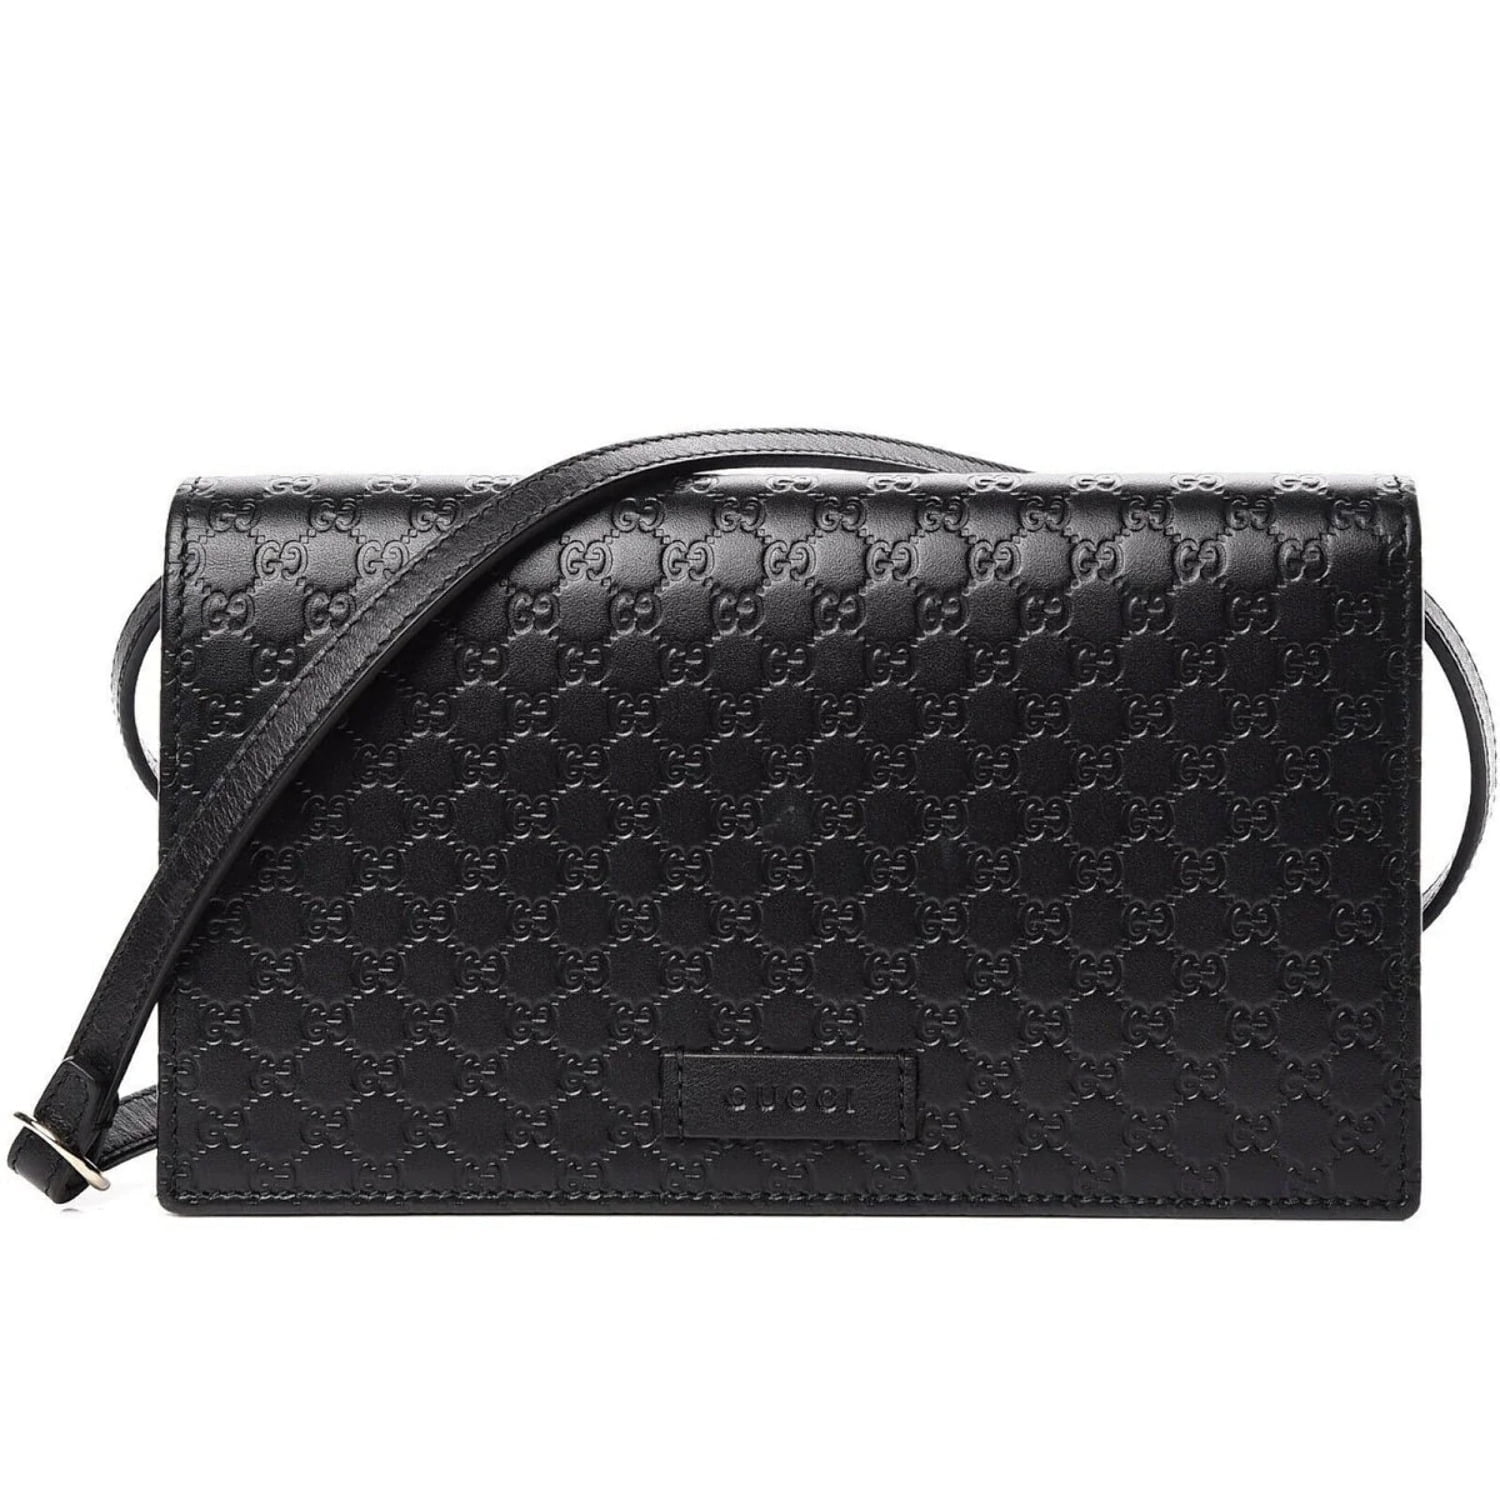 GUCCI 265697 Women's Black Leather GG Guccissima Boston Purse HandBag O/S |  Accessorising - Brand Name / Designer Handbags For Carry & Wear... Share If  You Care… | Bags, Gucci purses, Iconic bags